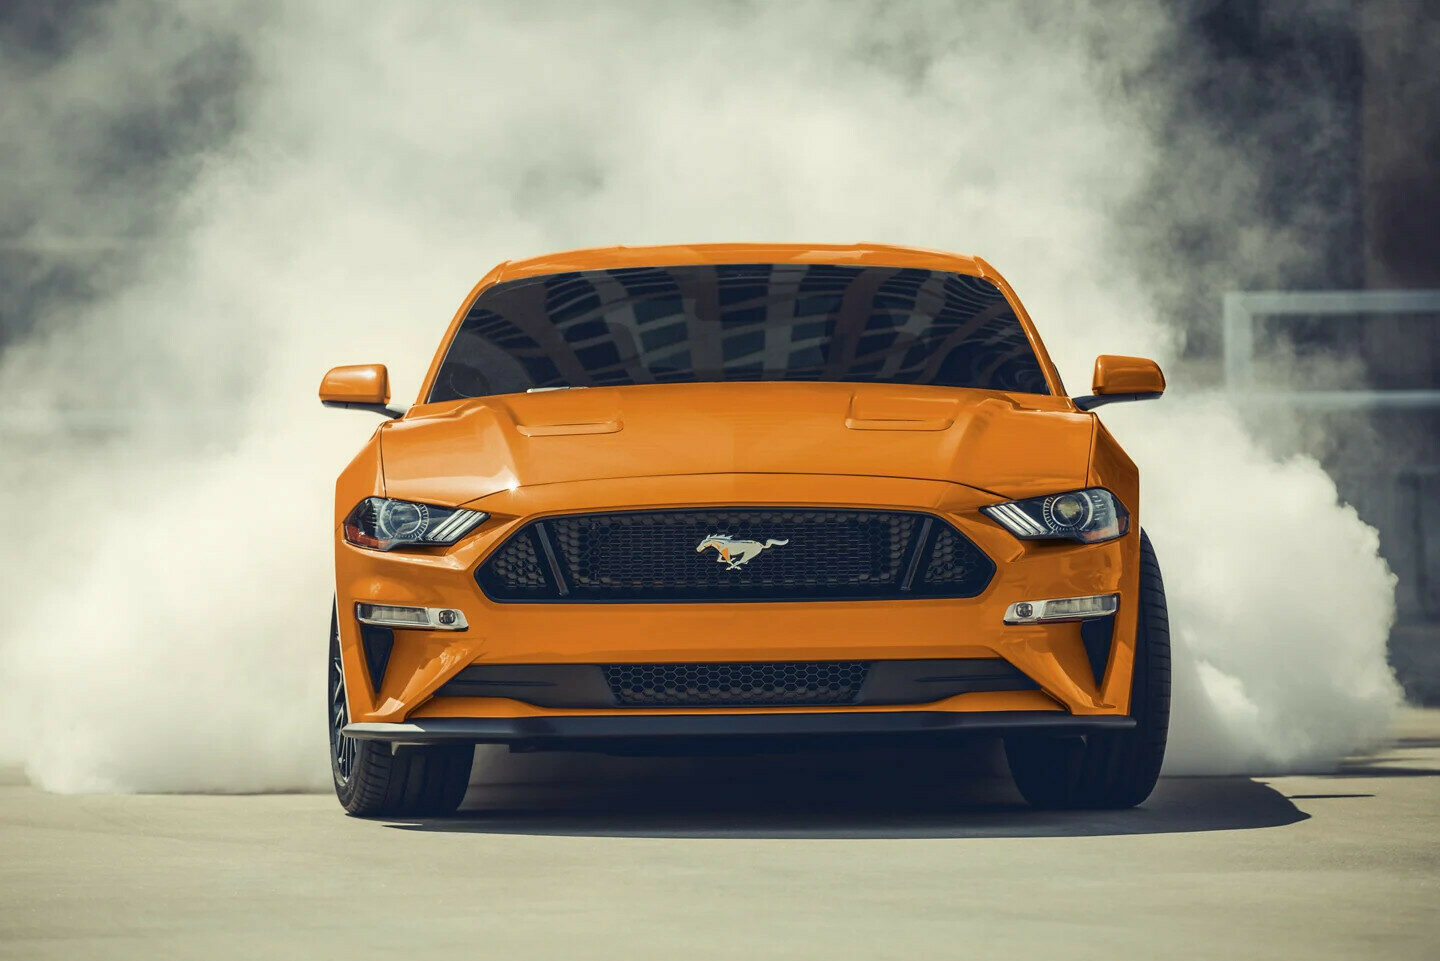 Consumer News: Ford recalls 188,000 model year 2020-2023 Mustangs